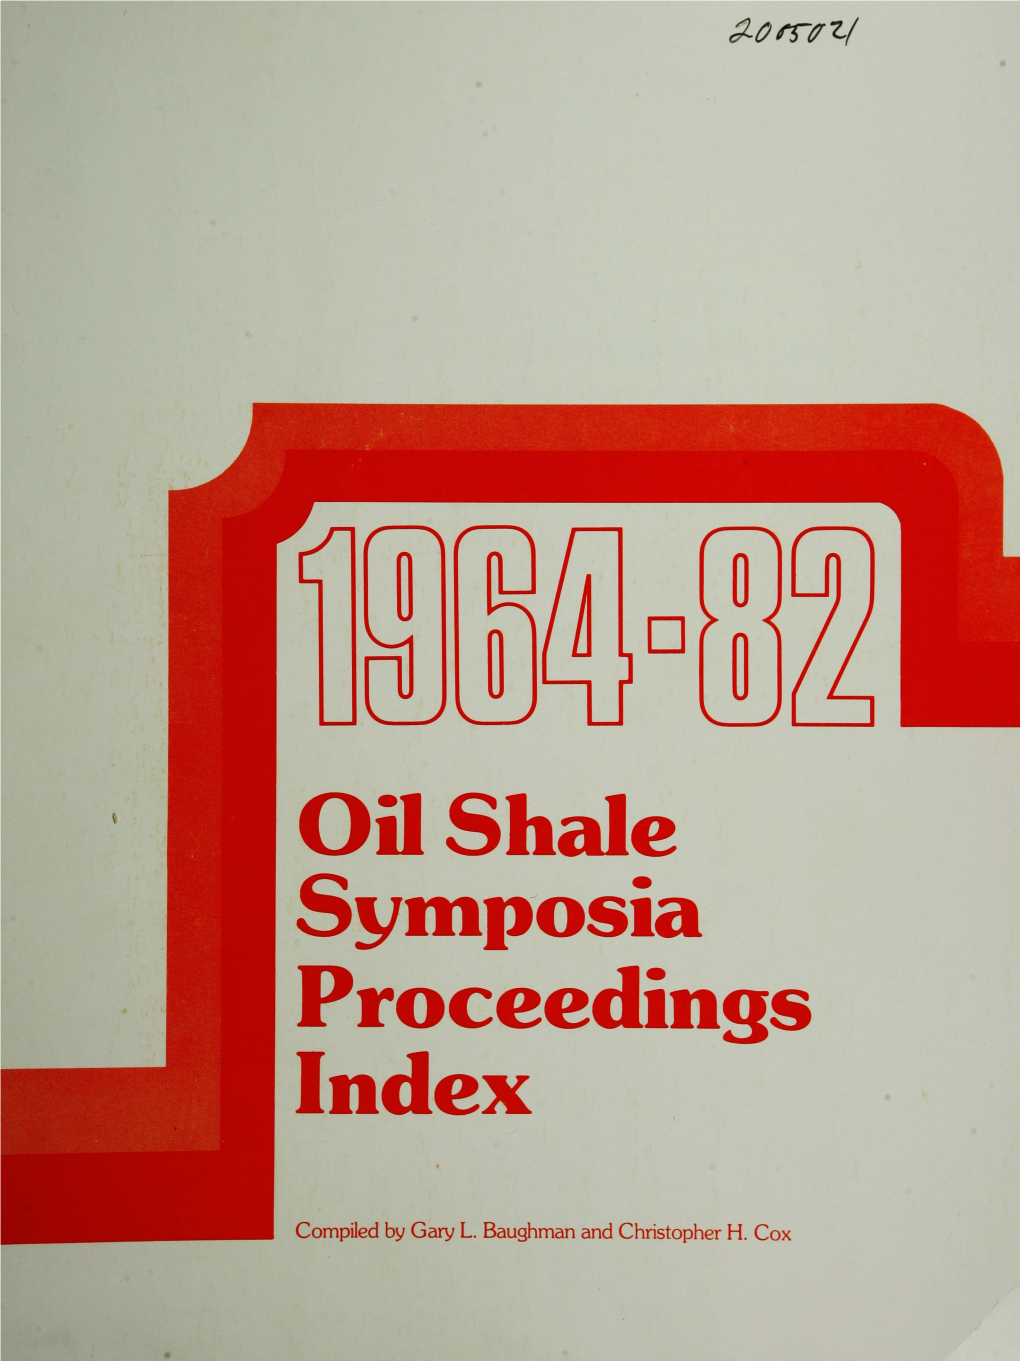 Oil Shale Symposia Proceedings Index 1964-82